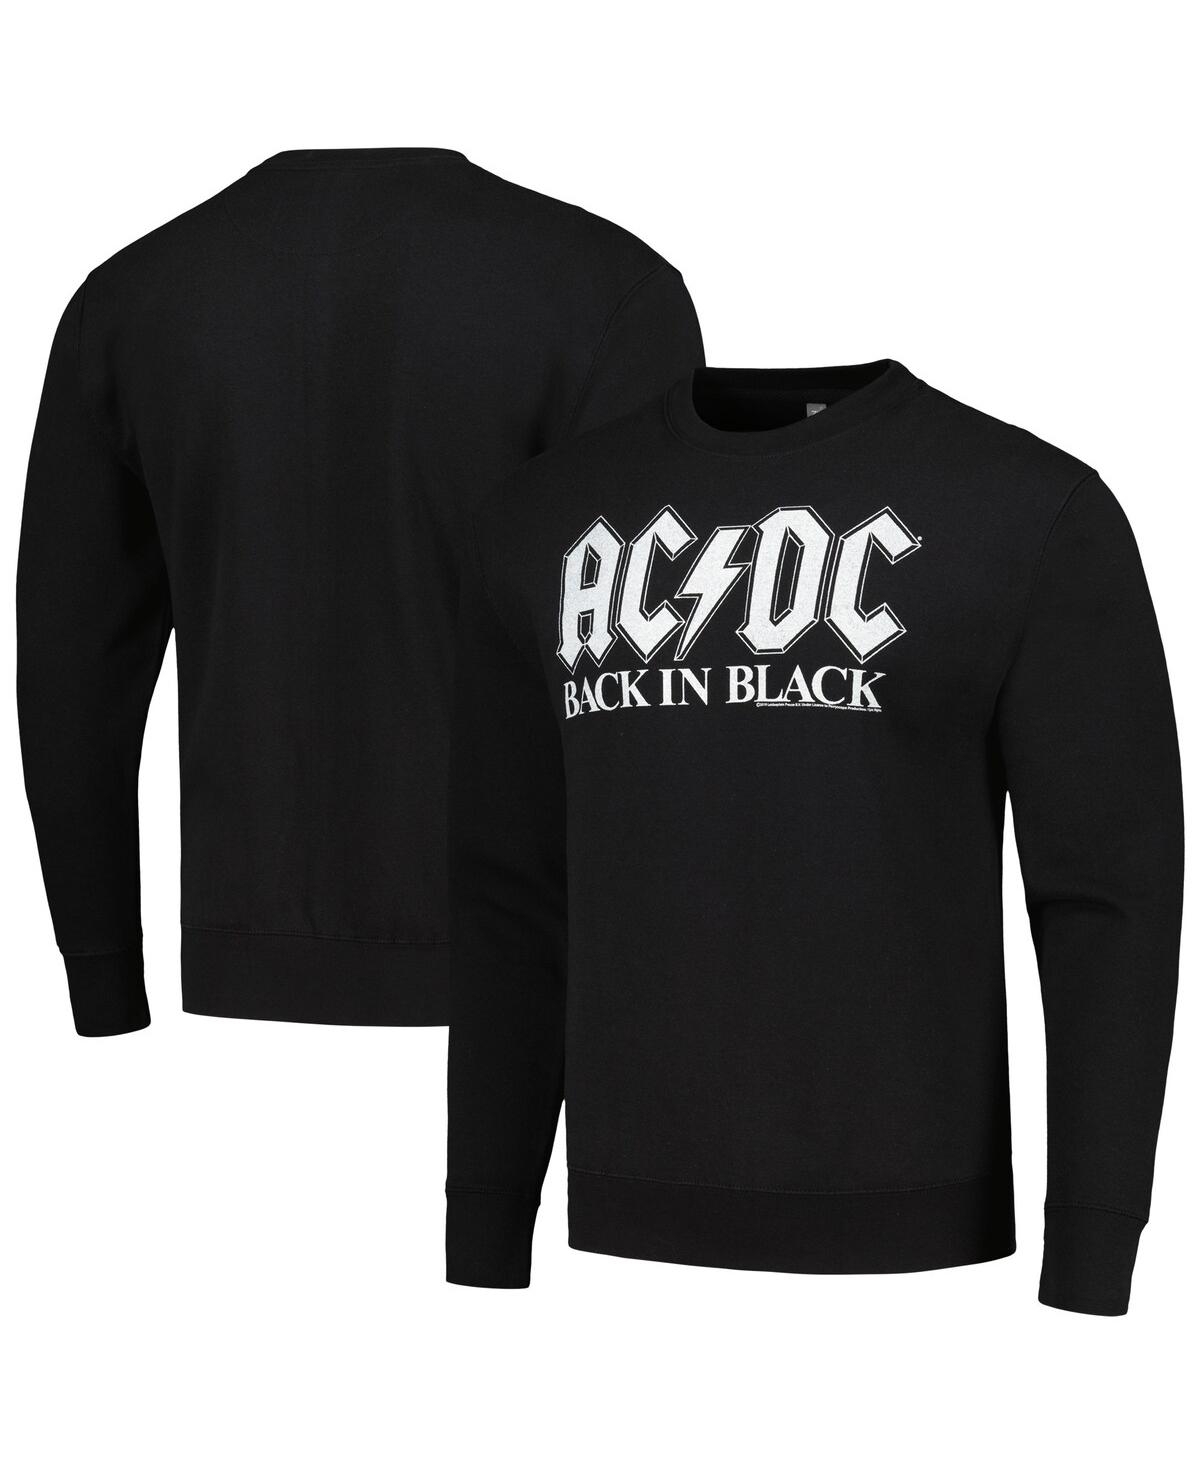 Men's Black Acdc Back In Black Pullover Sweatshirt - Black